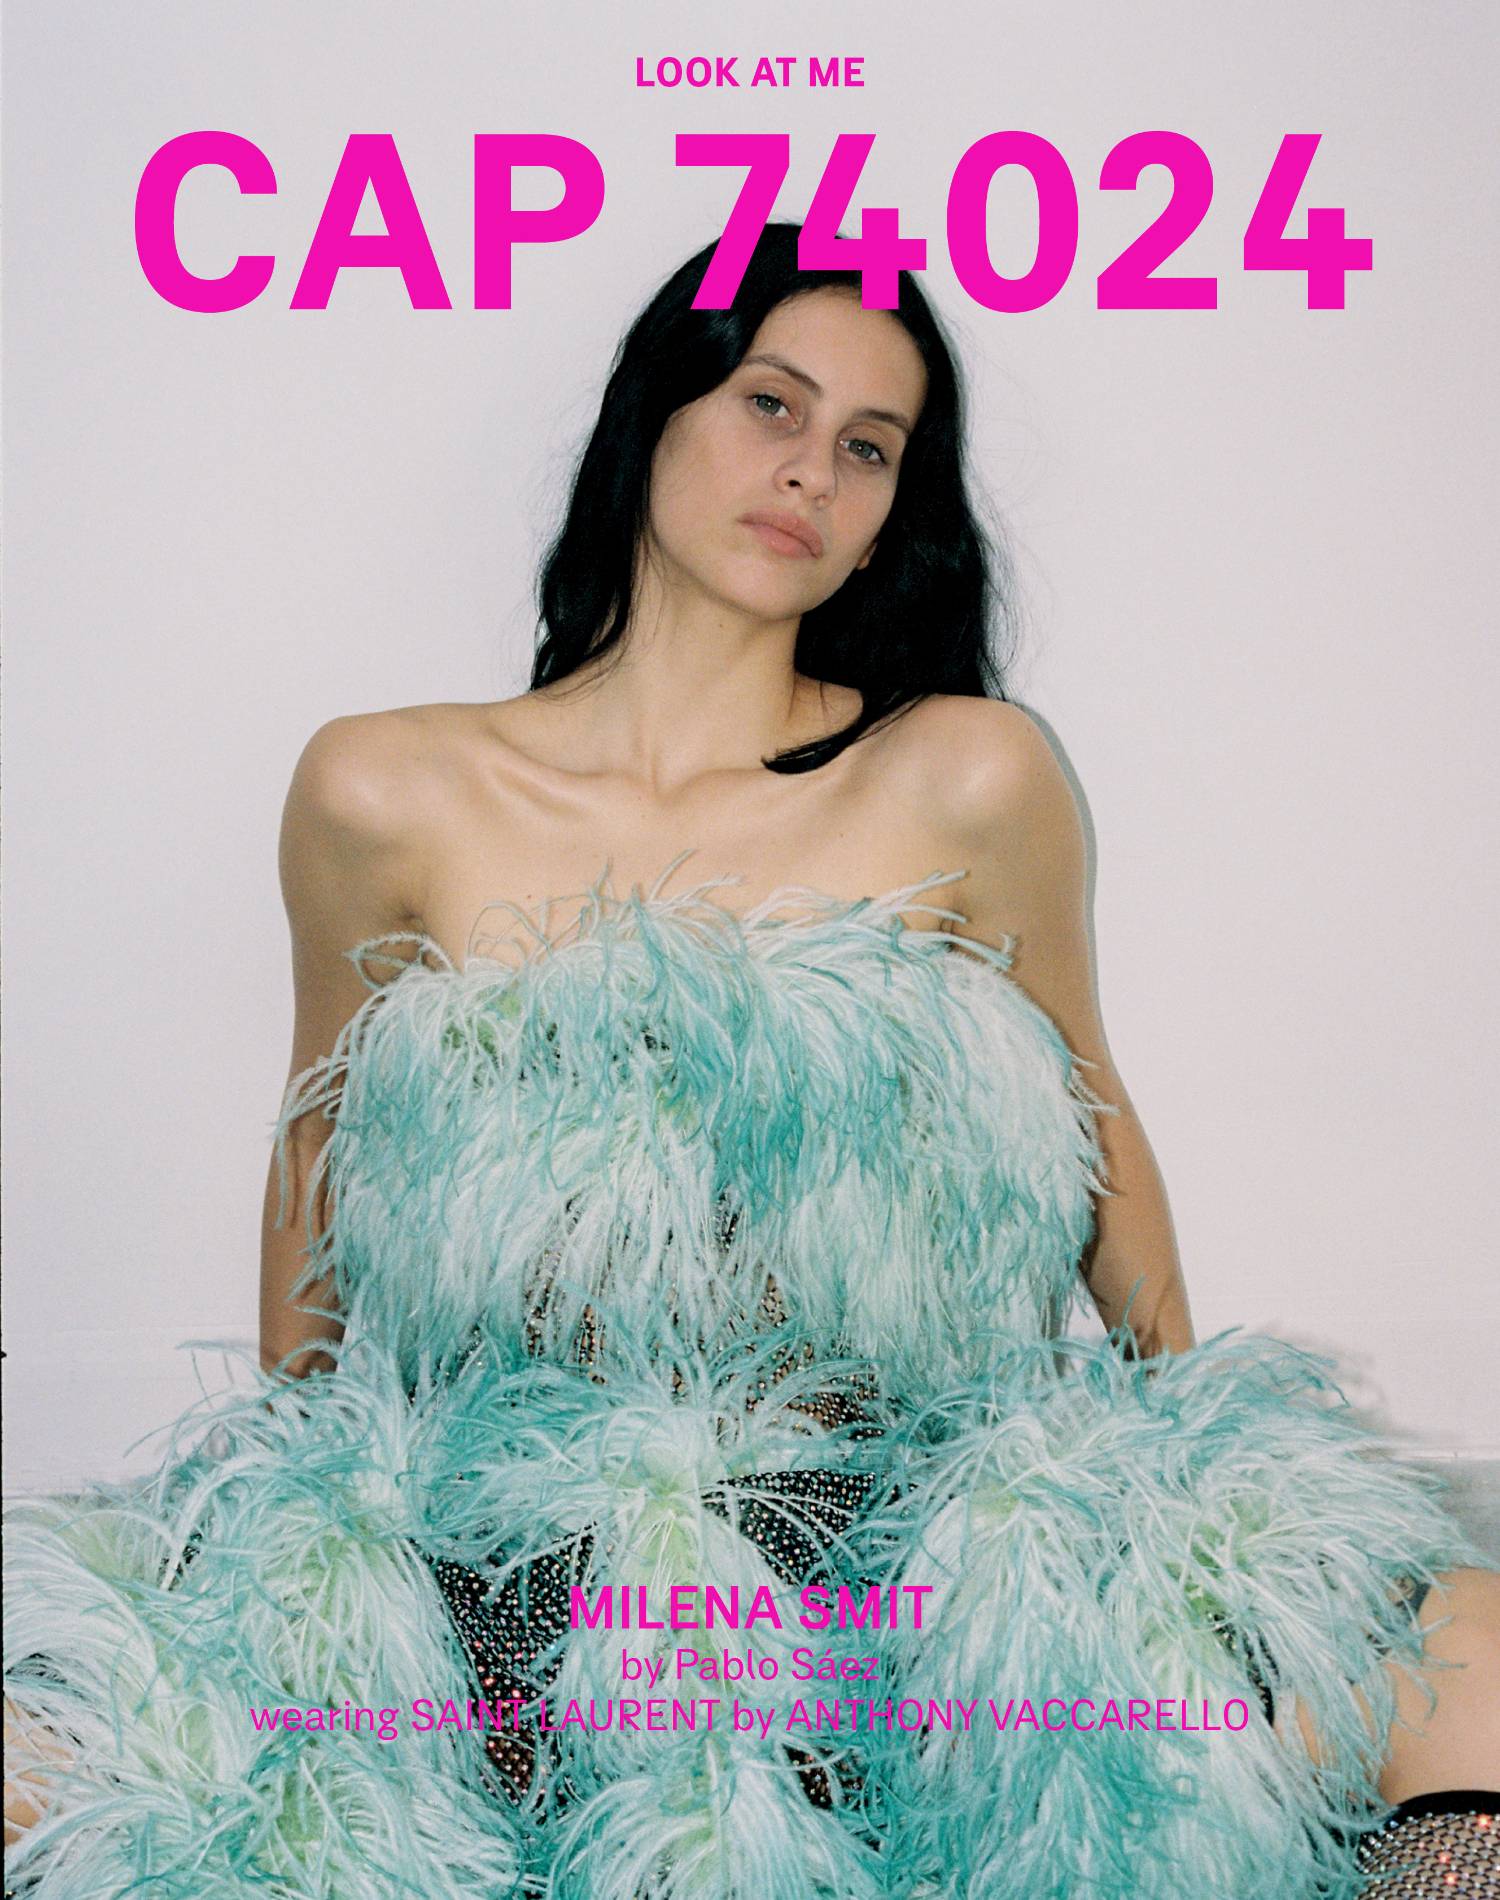 Milena Smit Covers CAP 74024 Magazine Fall 2021